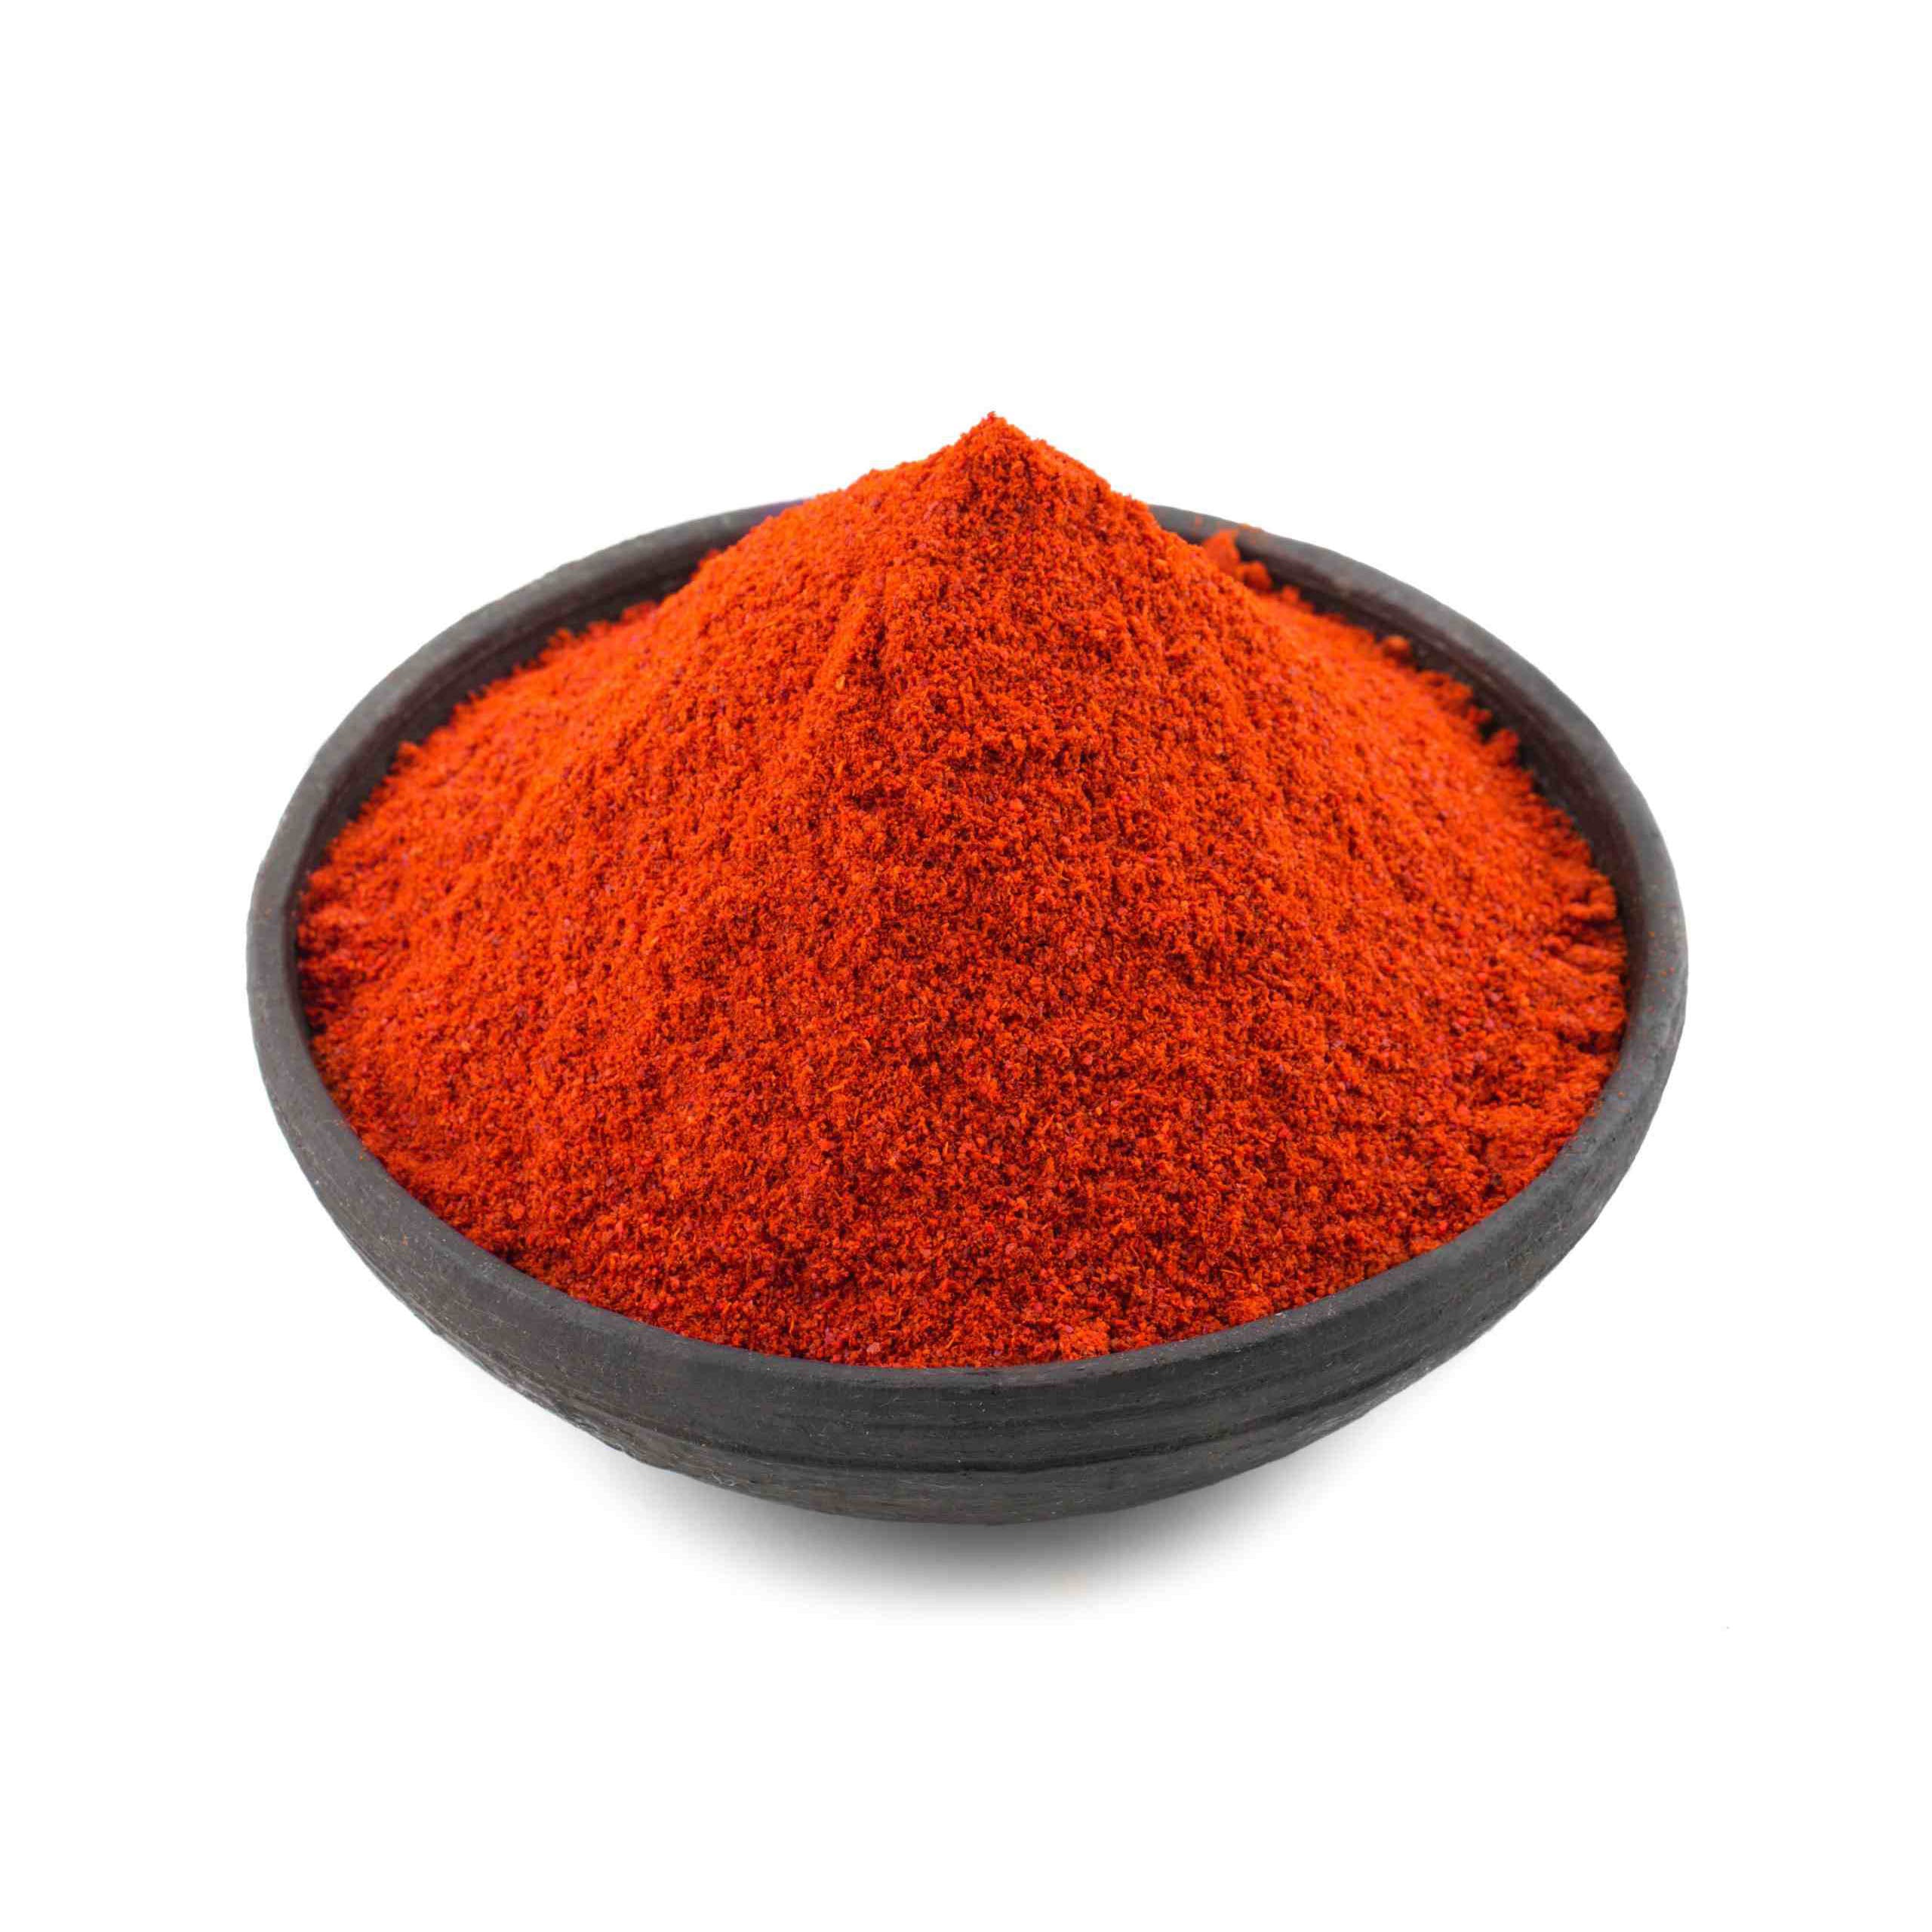 DC Preferred Red Chilli Powder - Hot, 400 g